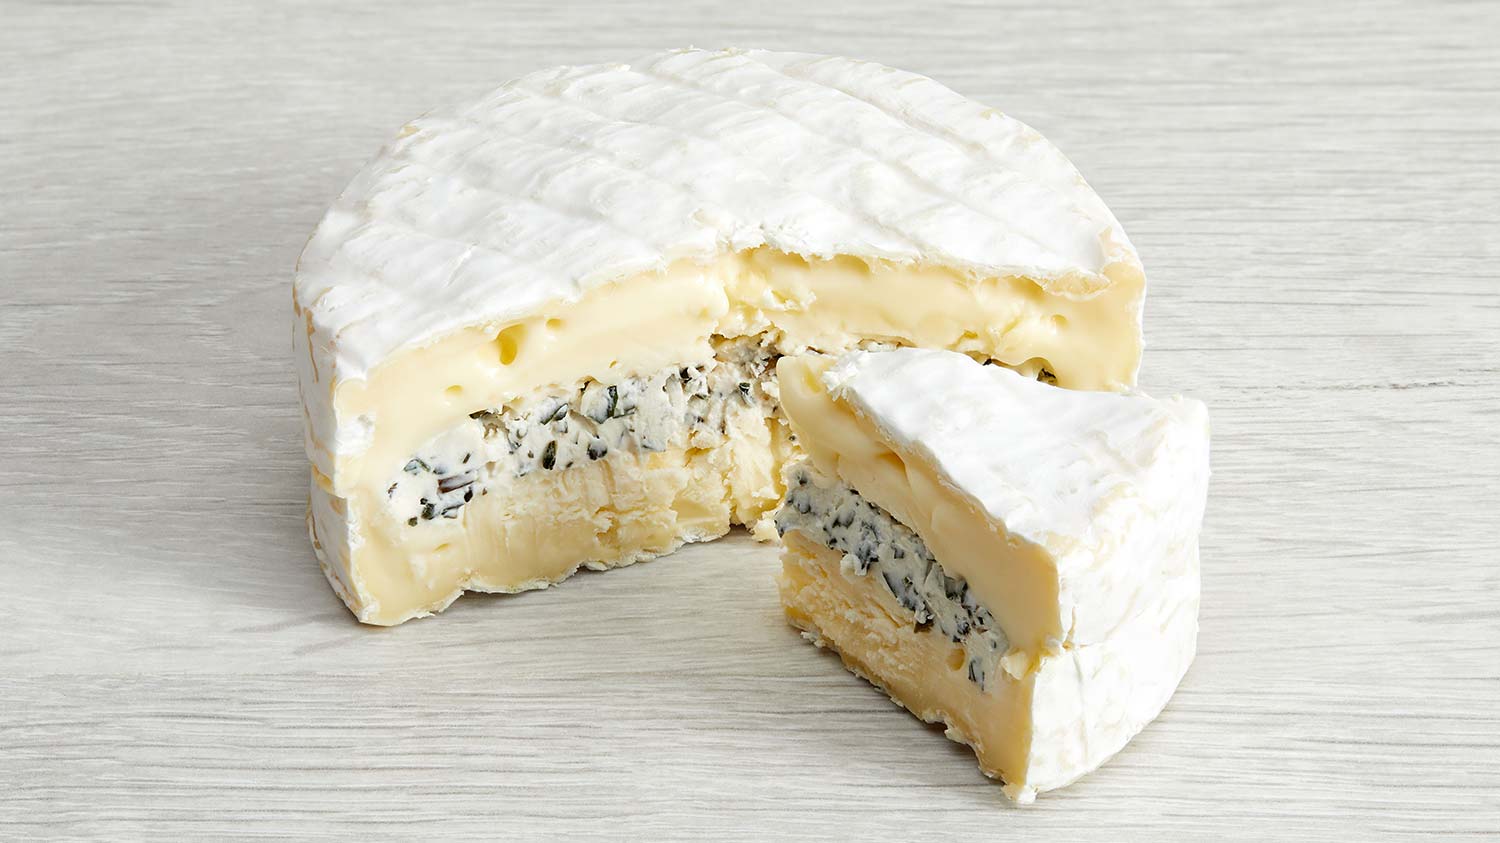 Cheeses_in_Season_Small_Petit_Camembert_Basilic_Cow_Cheese_with_Basil_Wild_Garlic_from_France_Seasonal_French_Cheese_in_Dubai_Abu_Dhabi_WISK_UAE.jpg